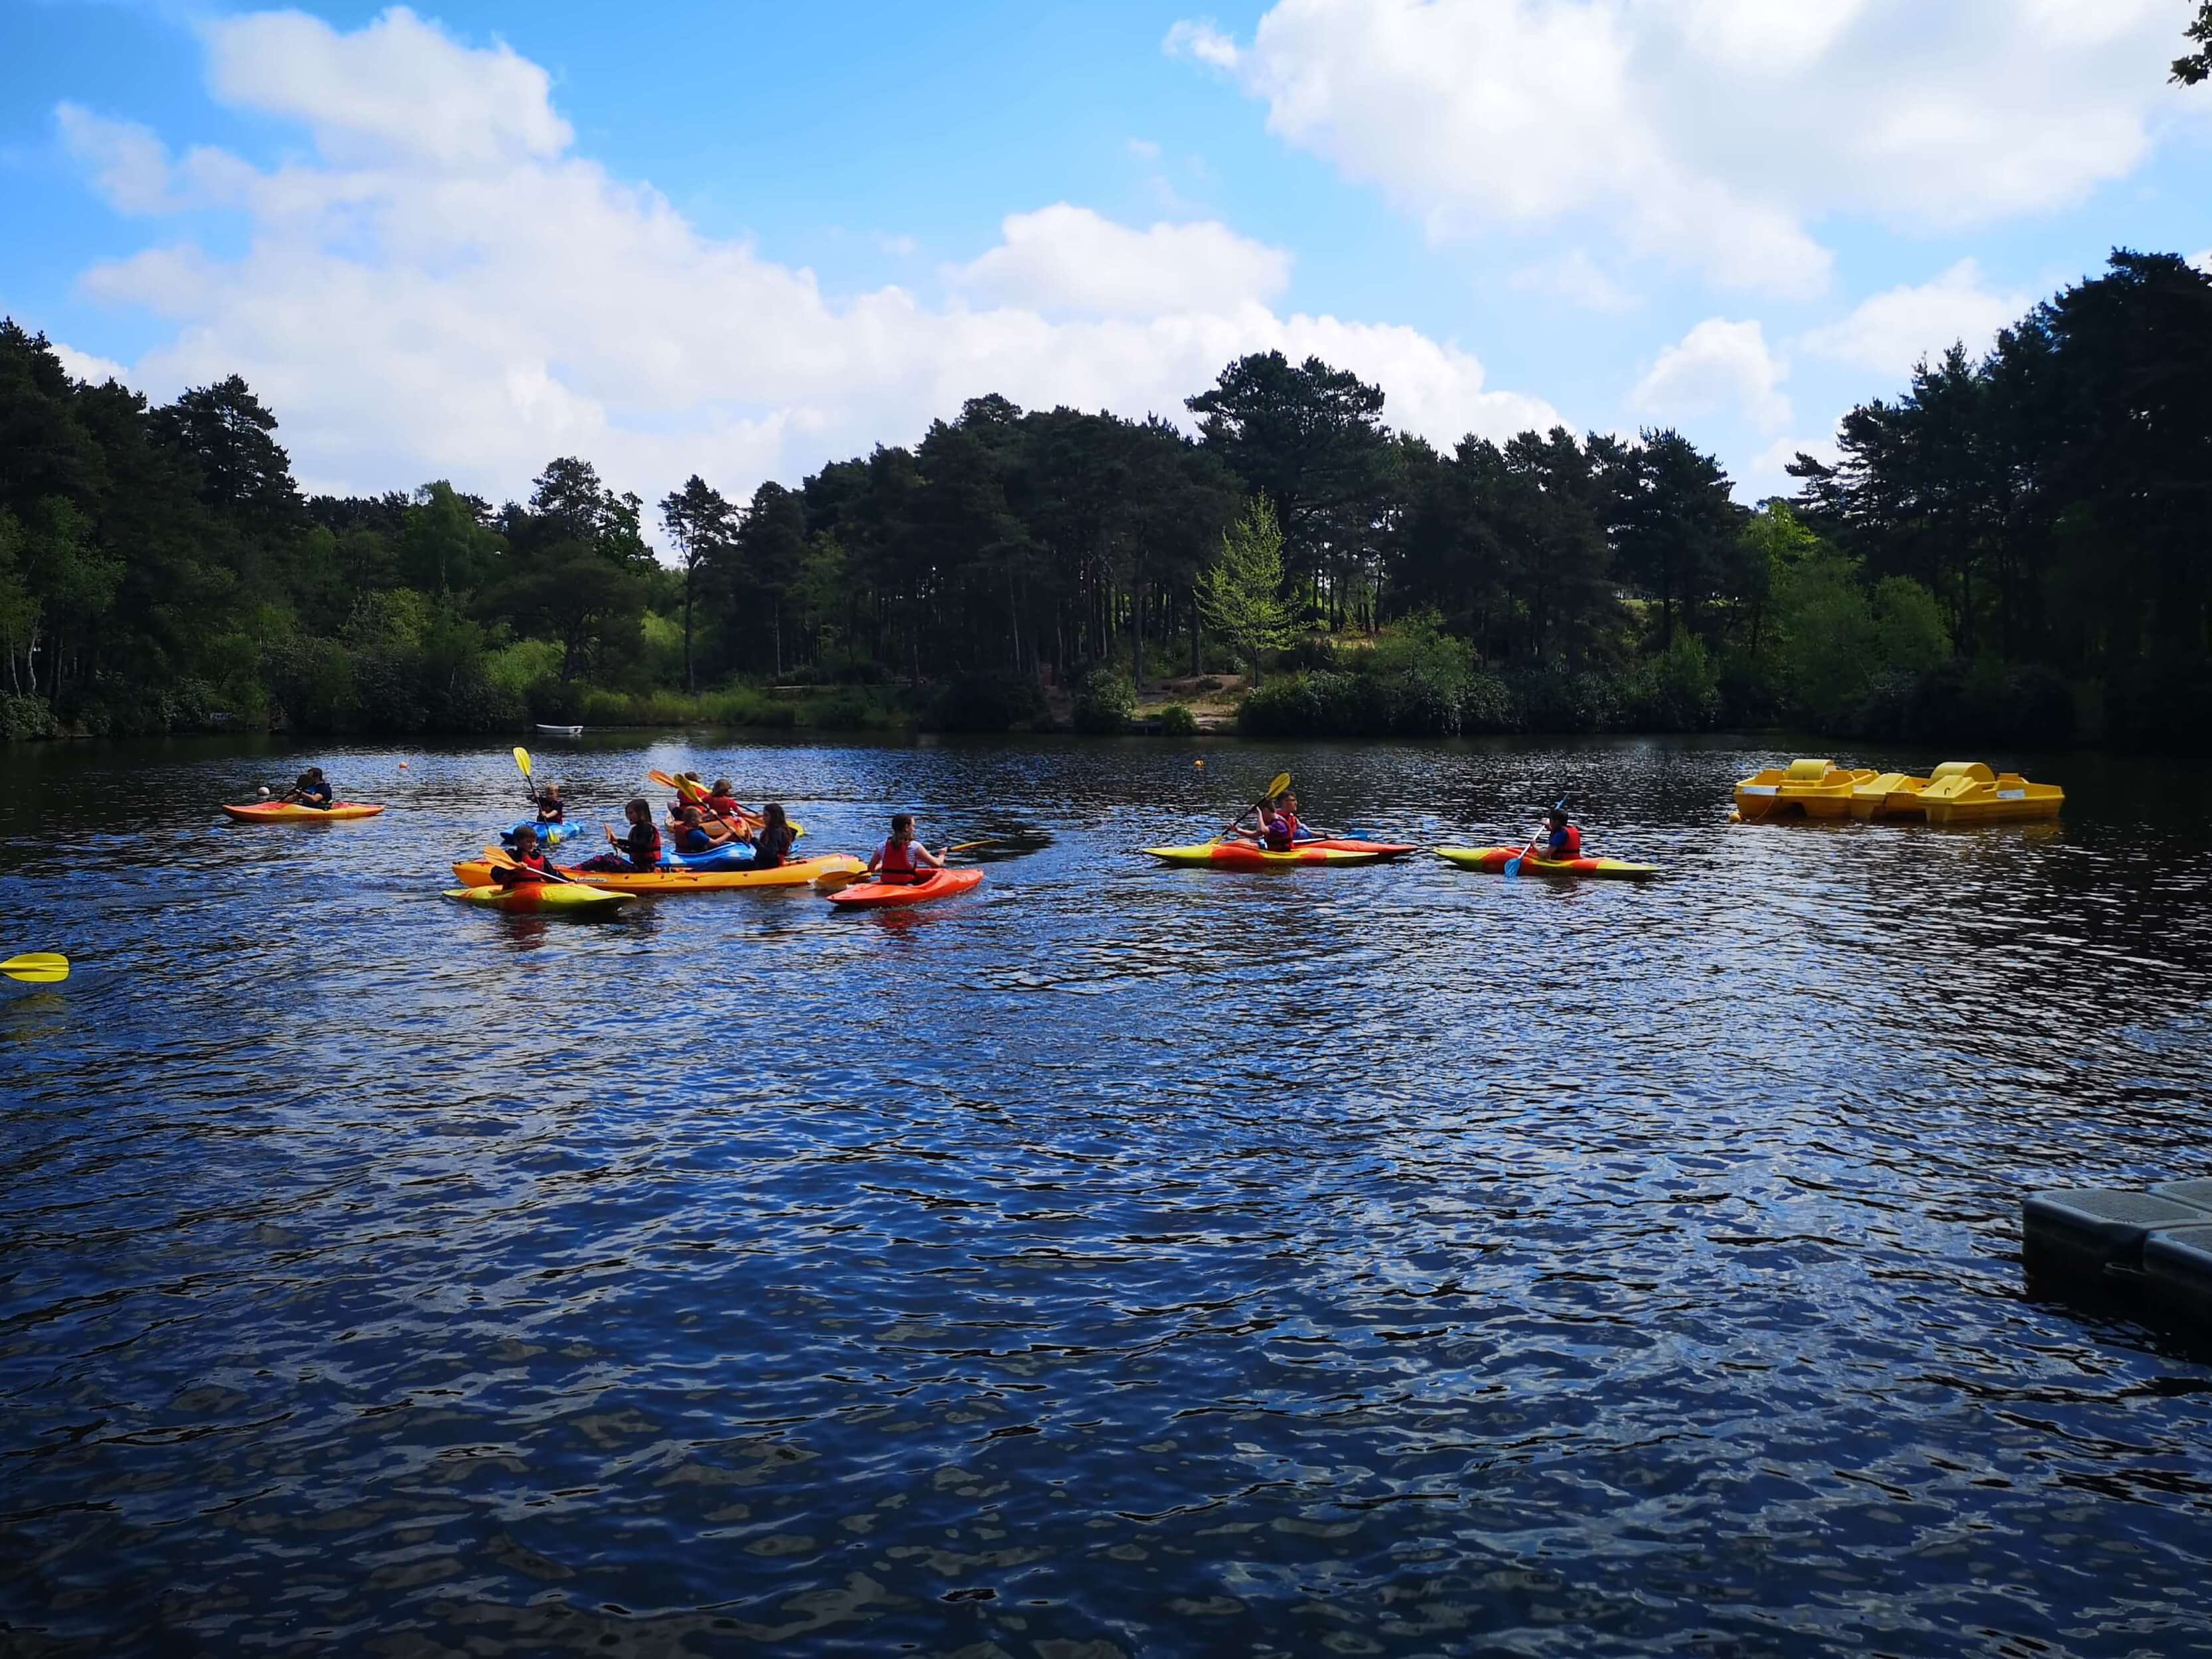 Group kayaking activity